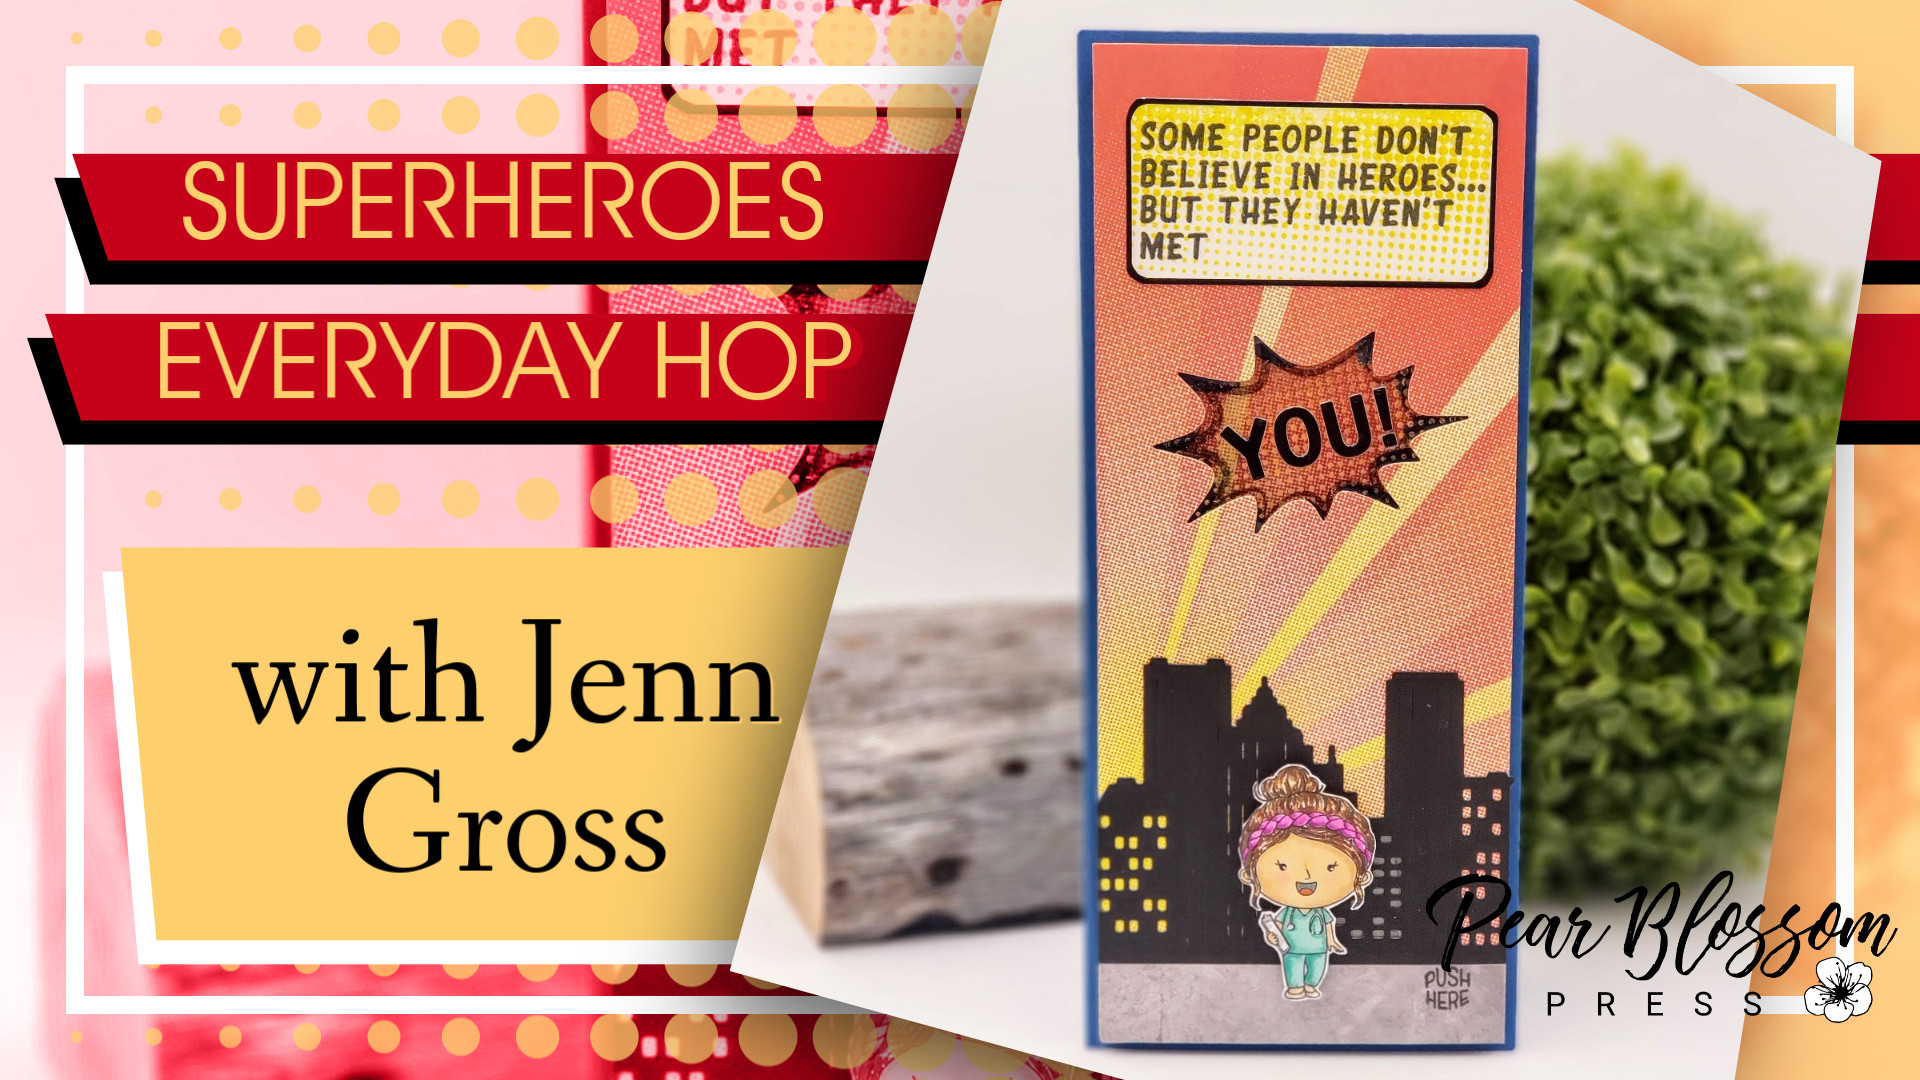 Superheroes Everyday Hop with Jenn Gross